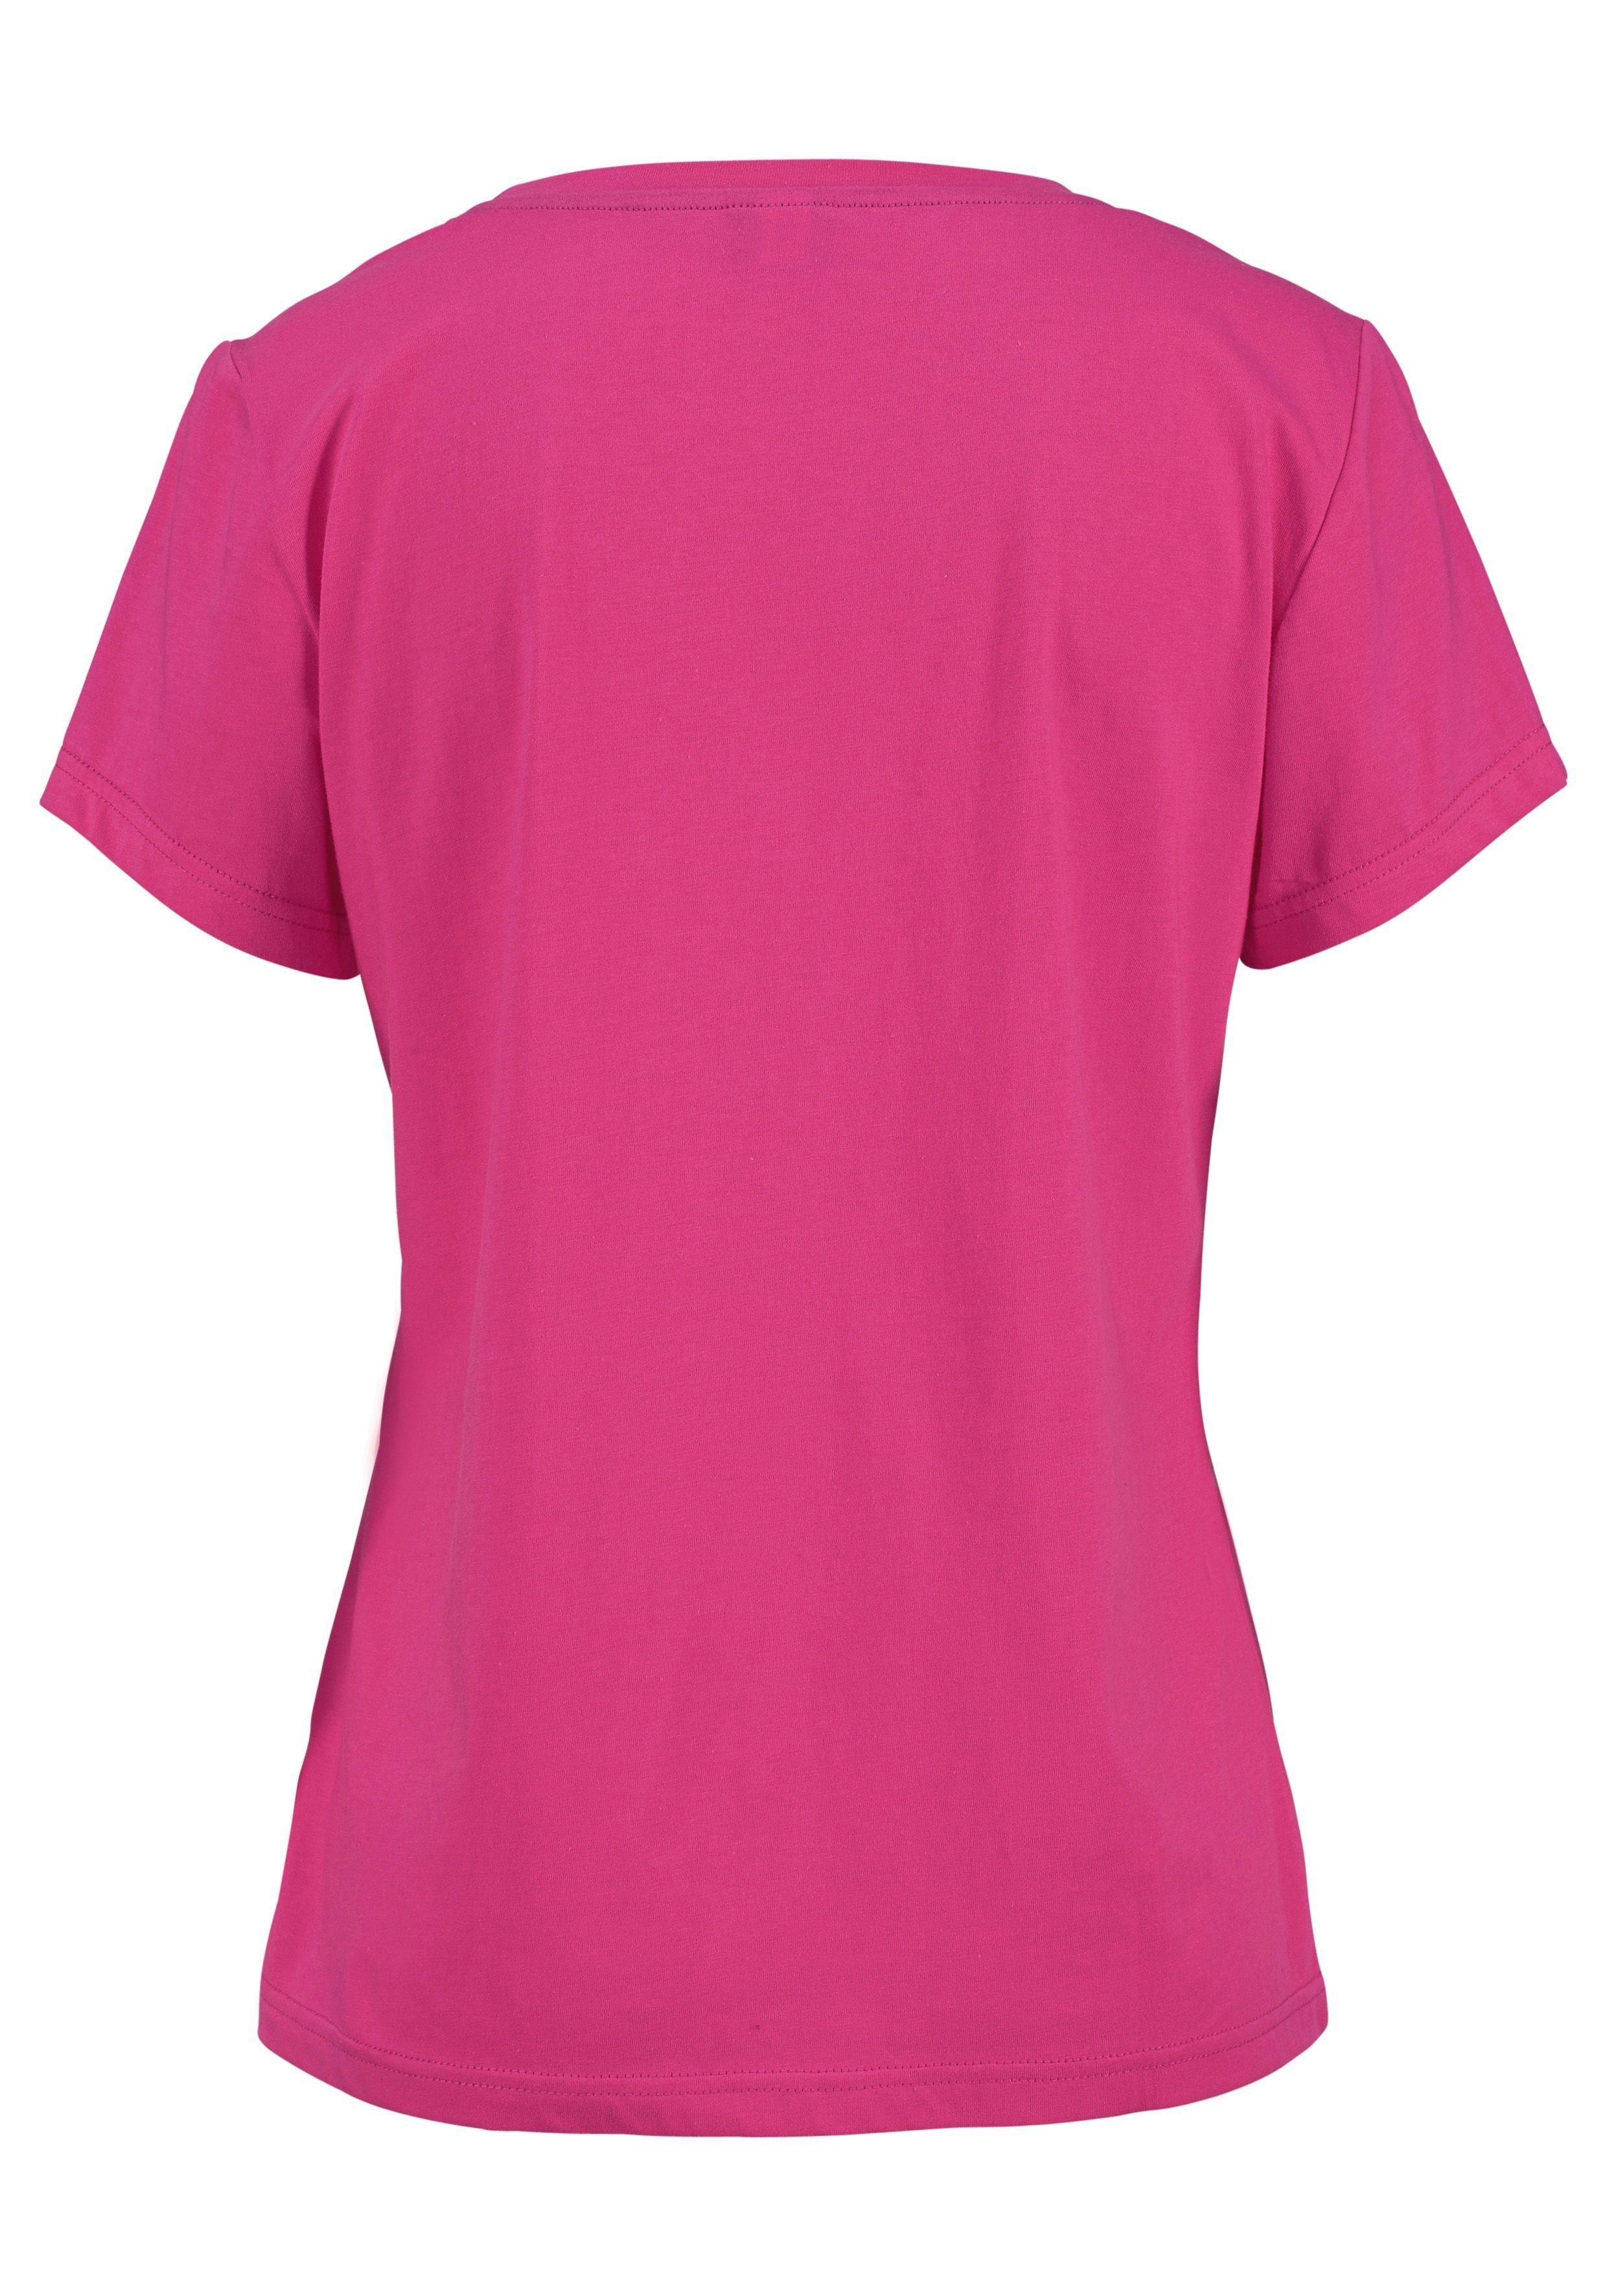 Vivance Dreams Pyjama (Set, 3 Frontschriftzug mit tlg) pink-schwarz